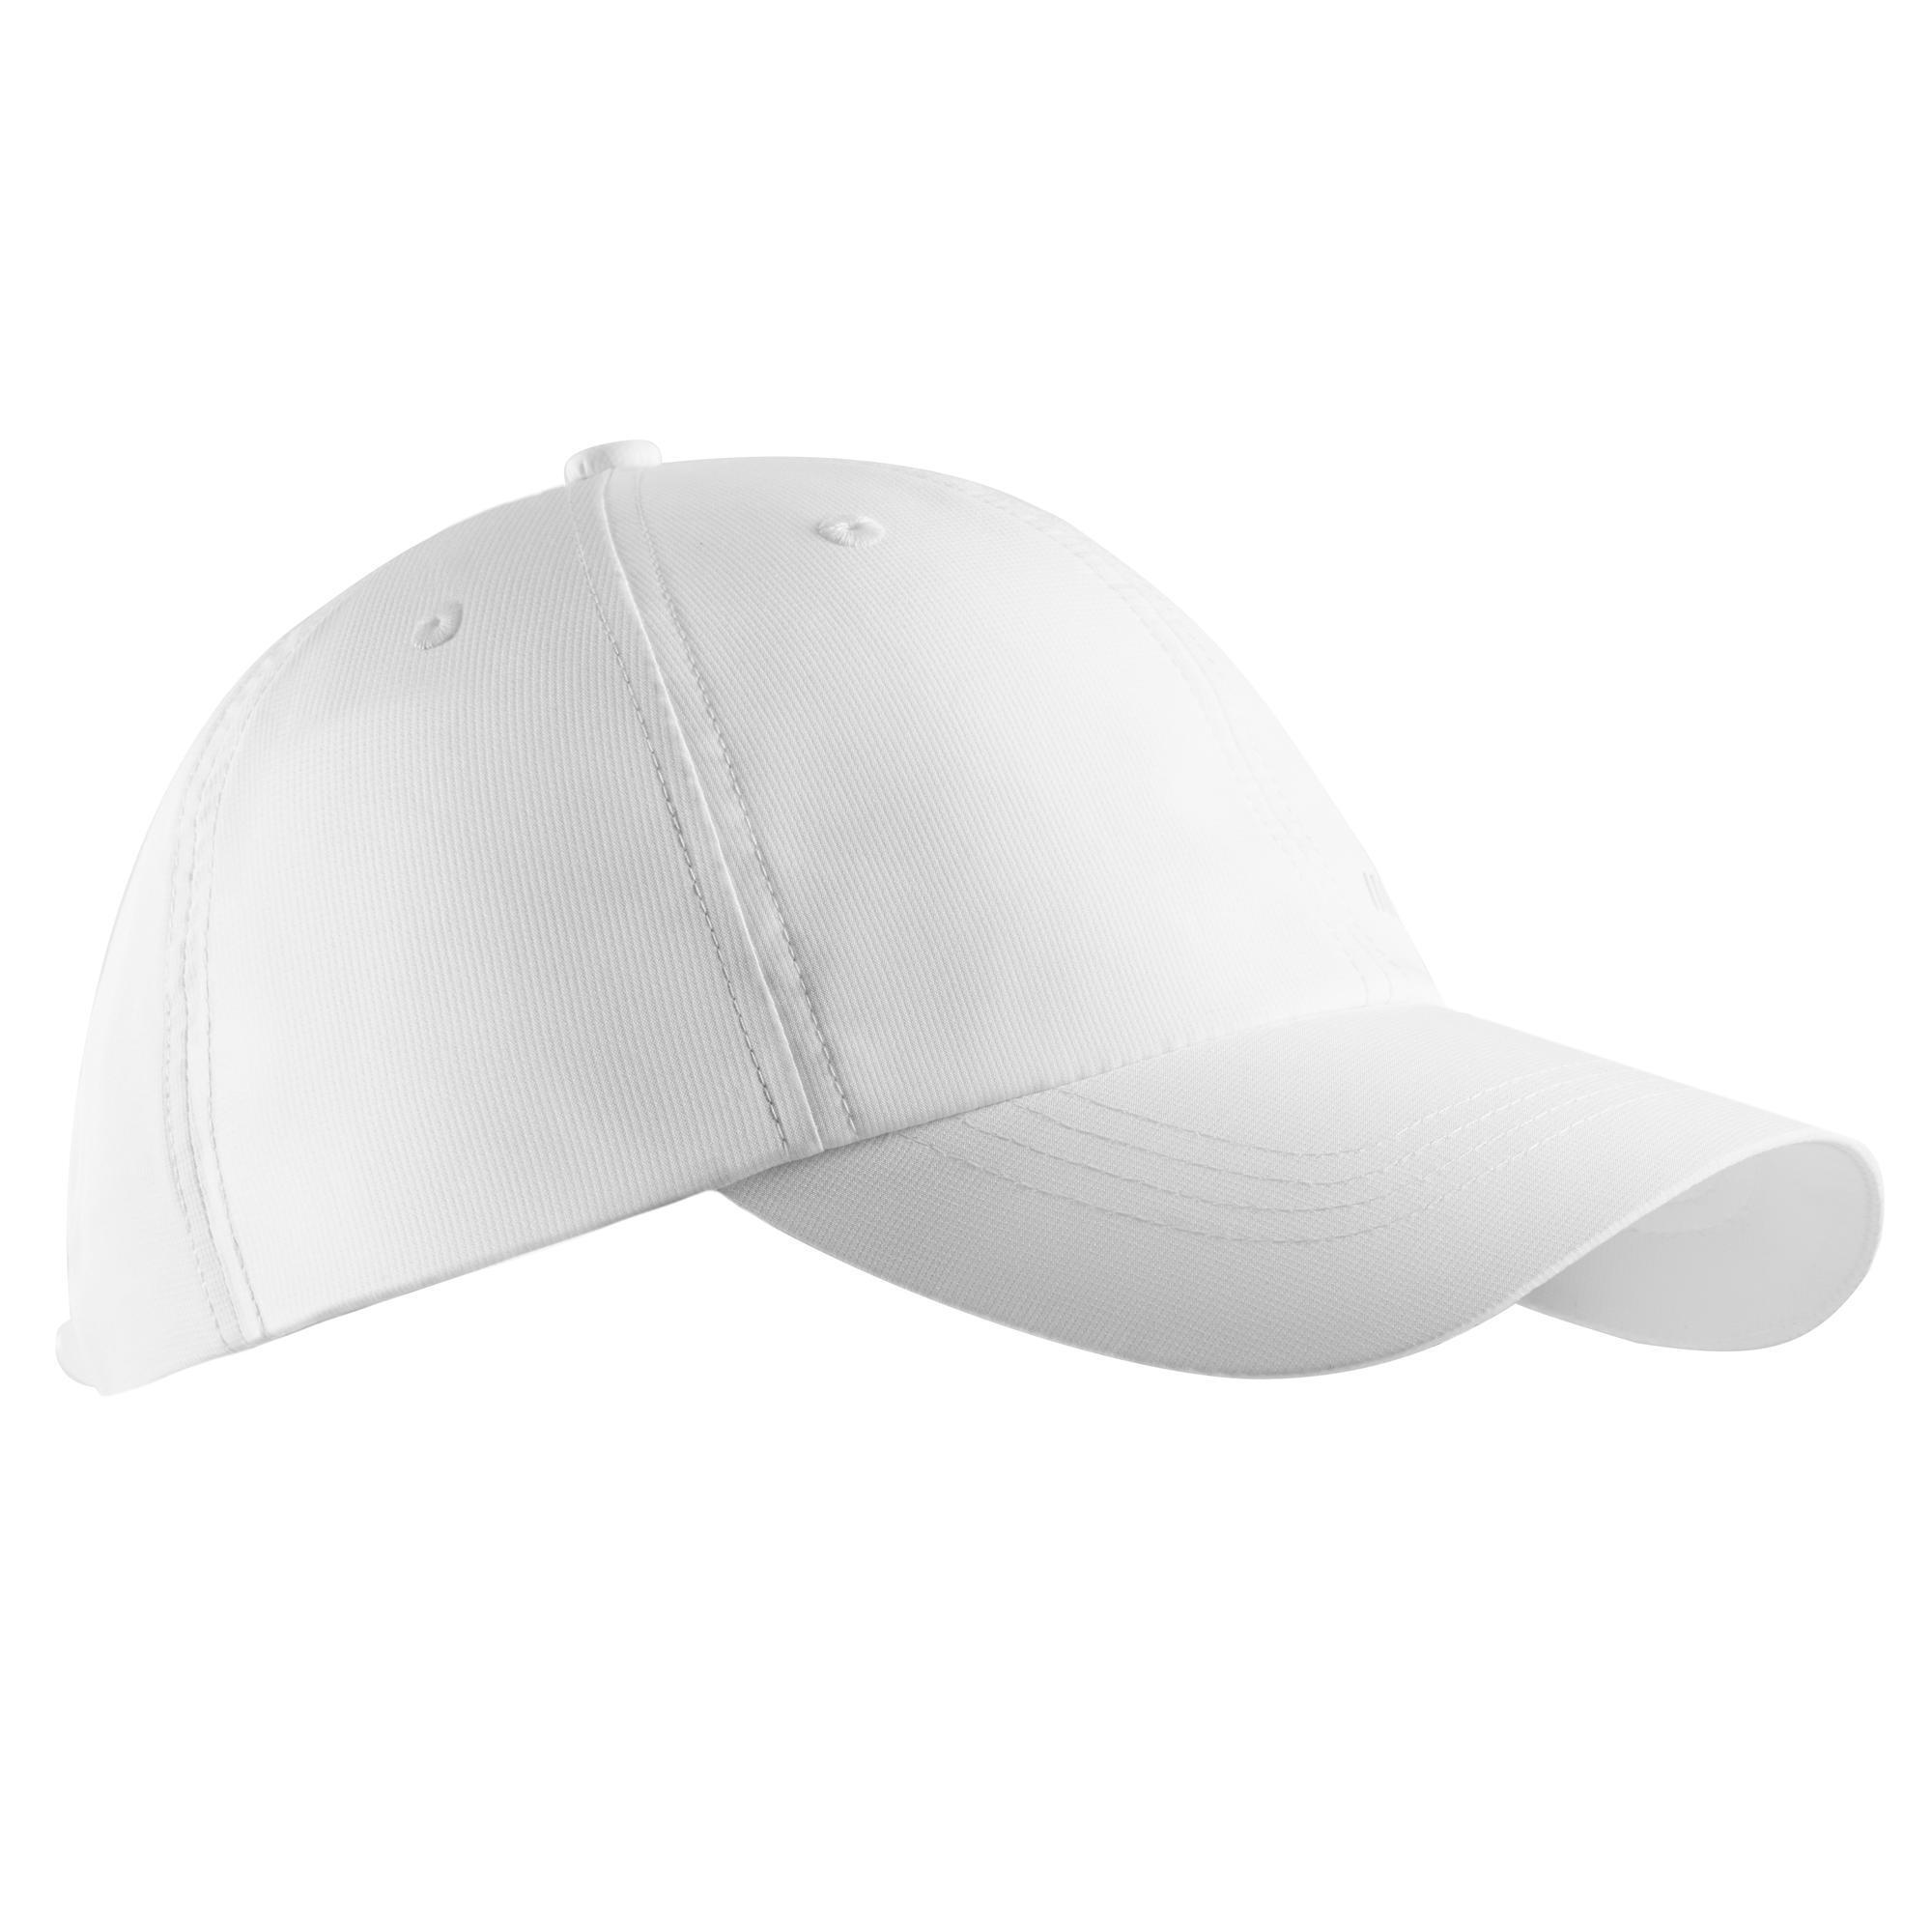 INESIS Adult's golf cap - WW 500 white